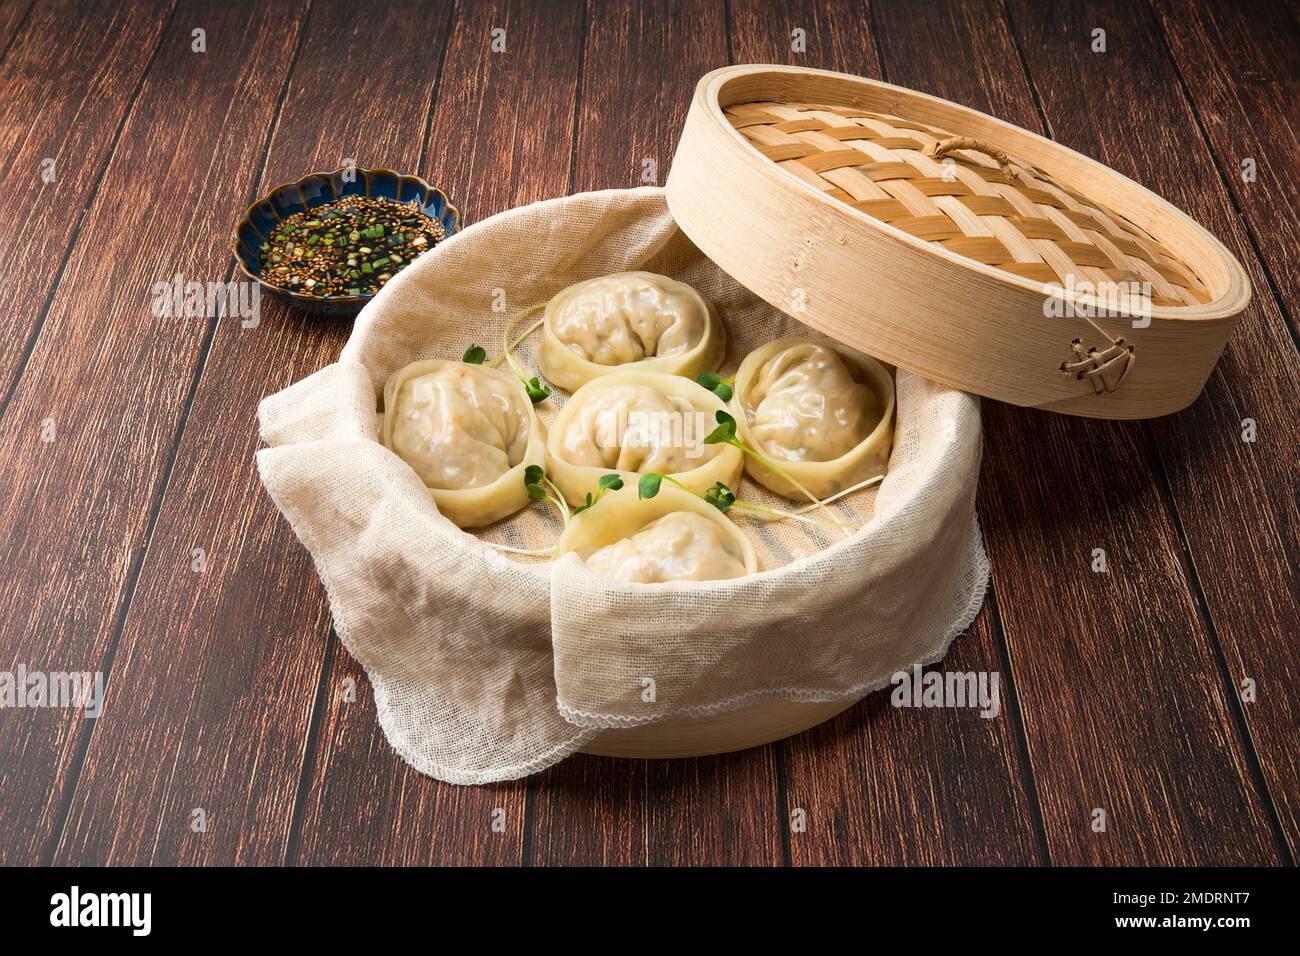 Delicious homemade Korean kimchi dumplings in a bamboo steamer. Stock Photo